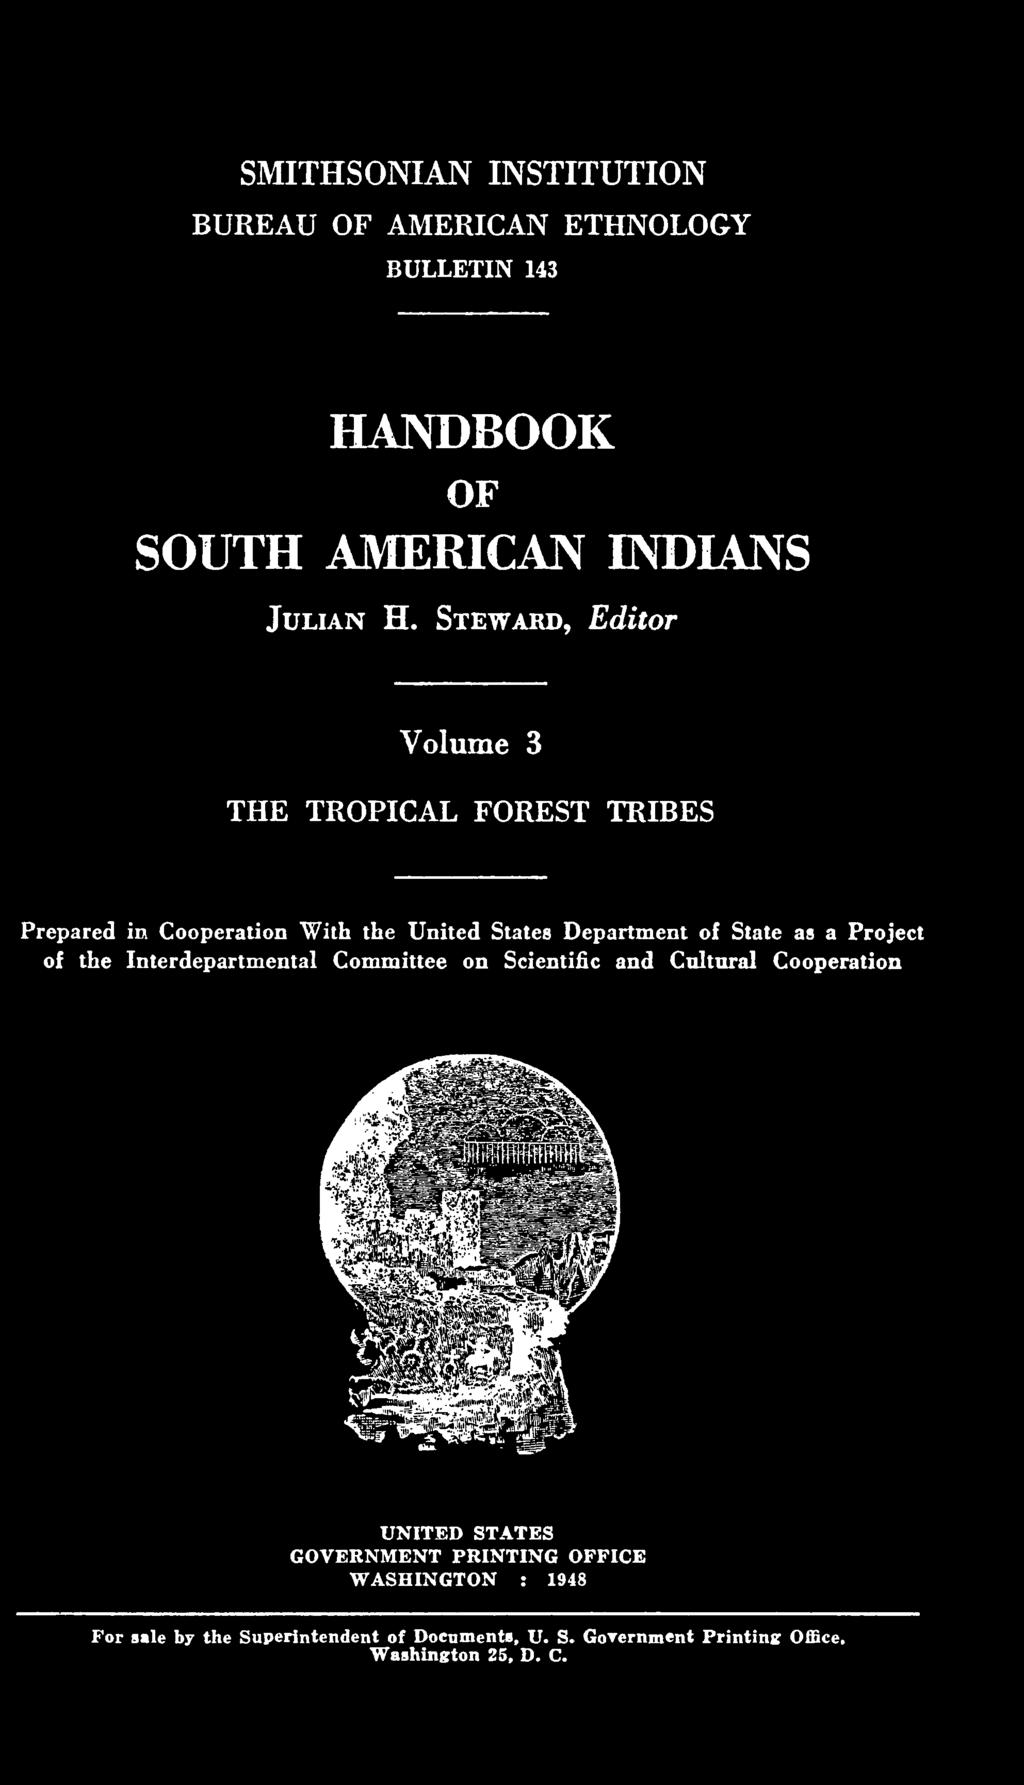 Cooperation Extraído do volume 3 (1948) do Handbook of South American Indians.